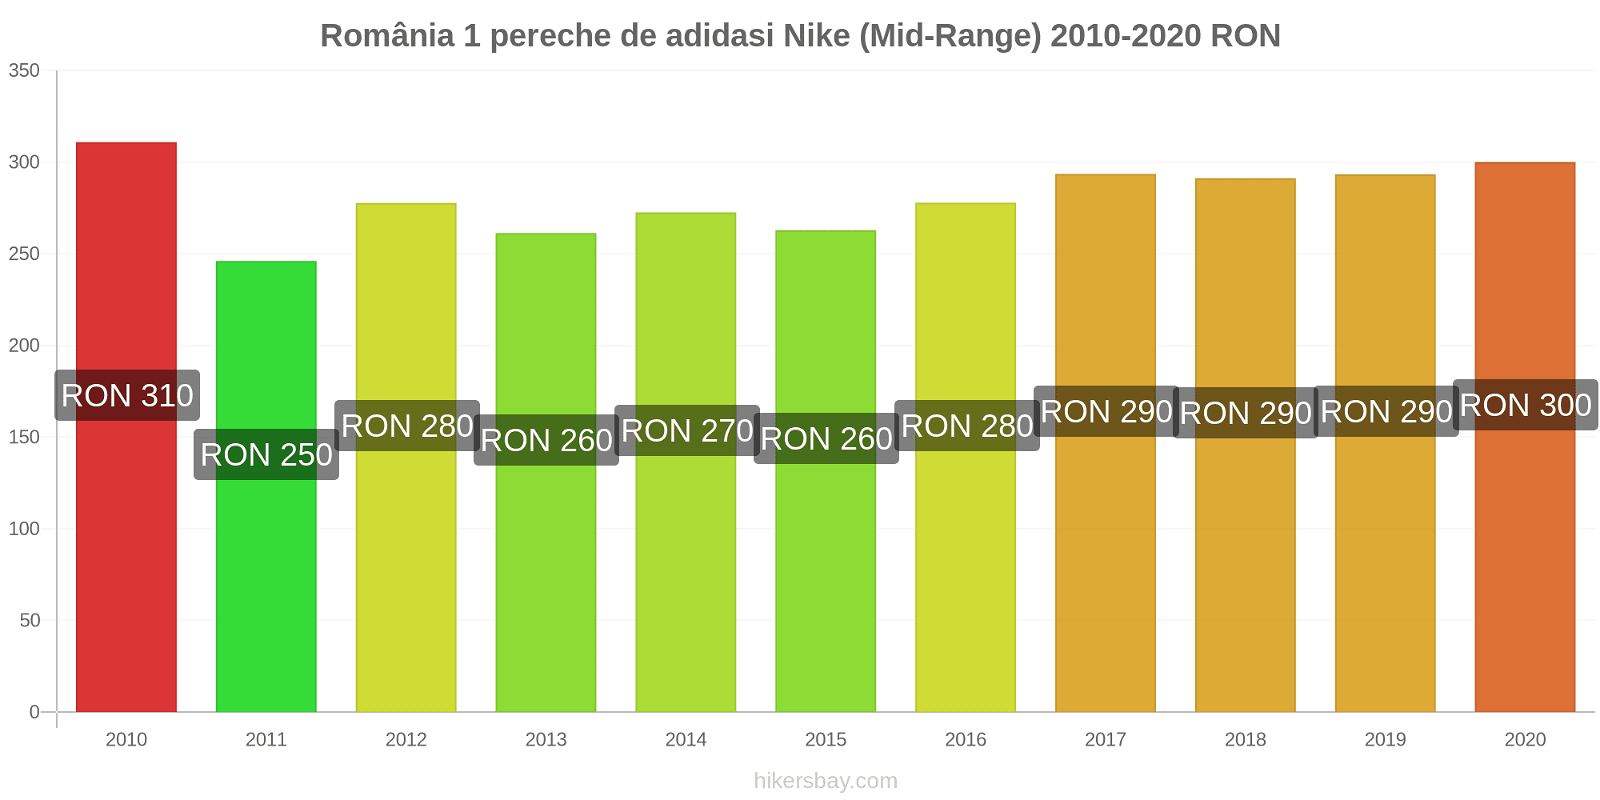 România modificări de preț 1 pereche de adidasi Nike (Mid-Range) hikersbay.com